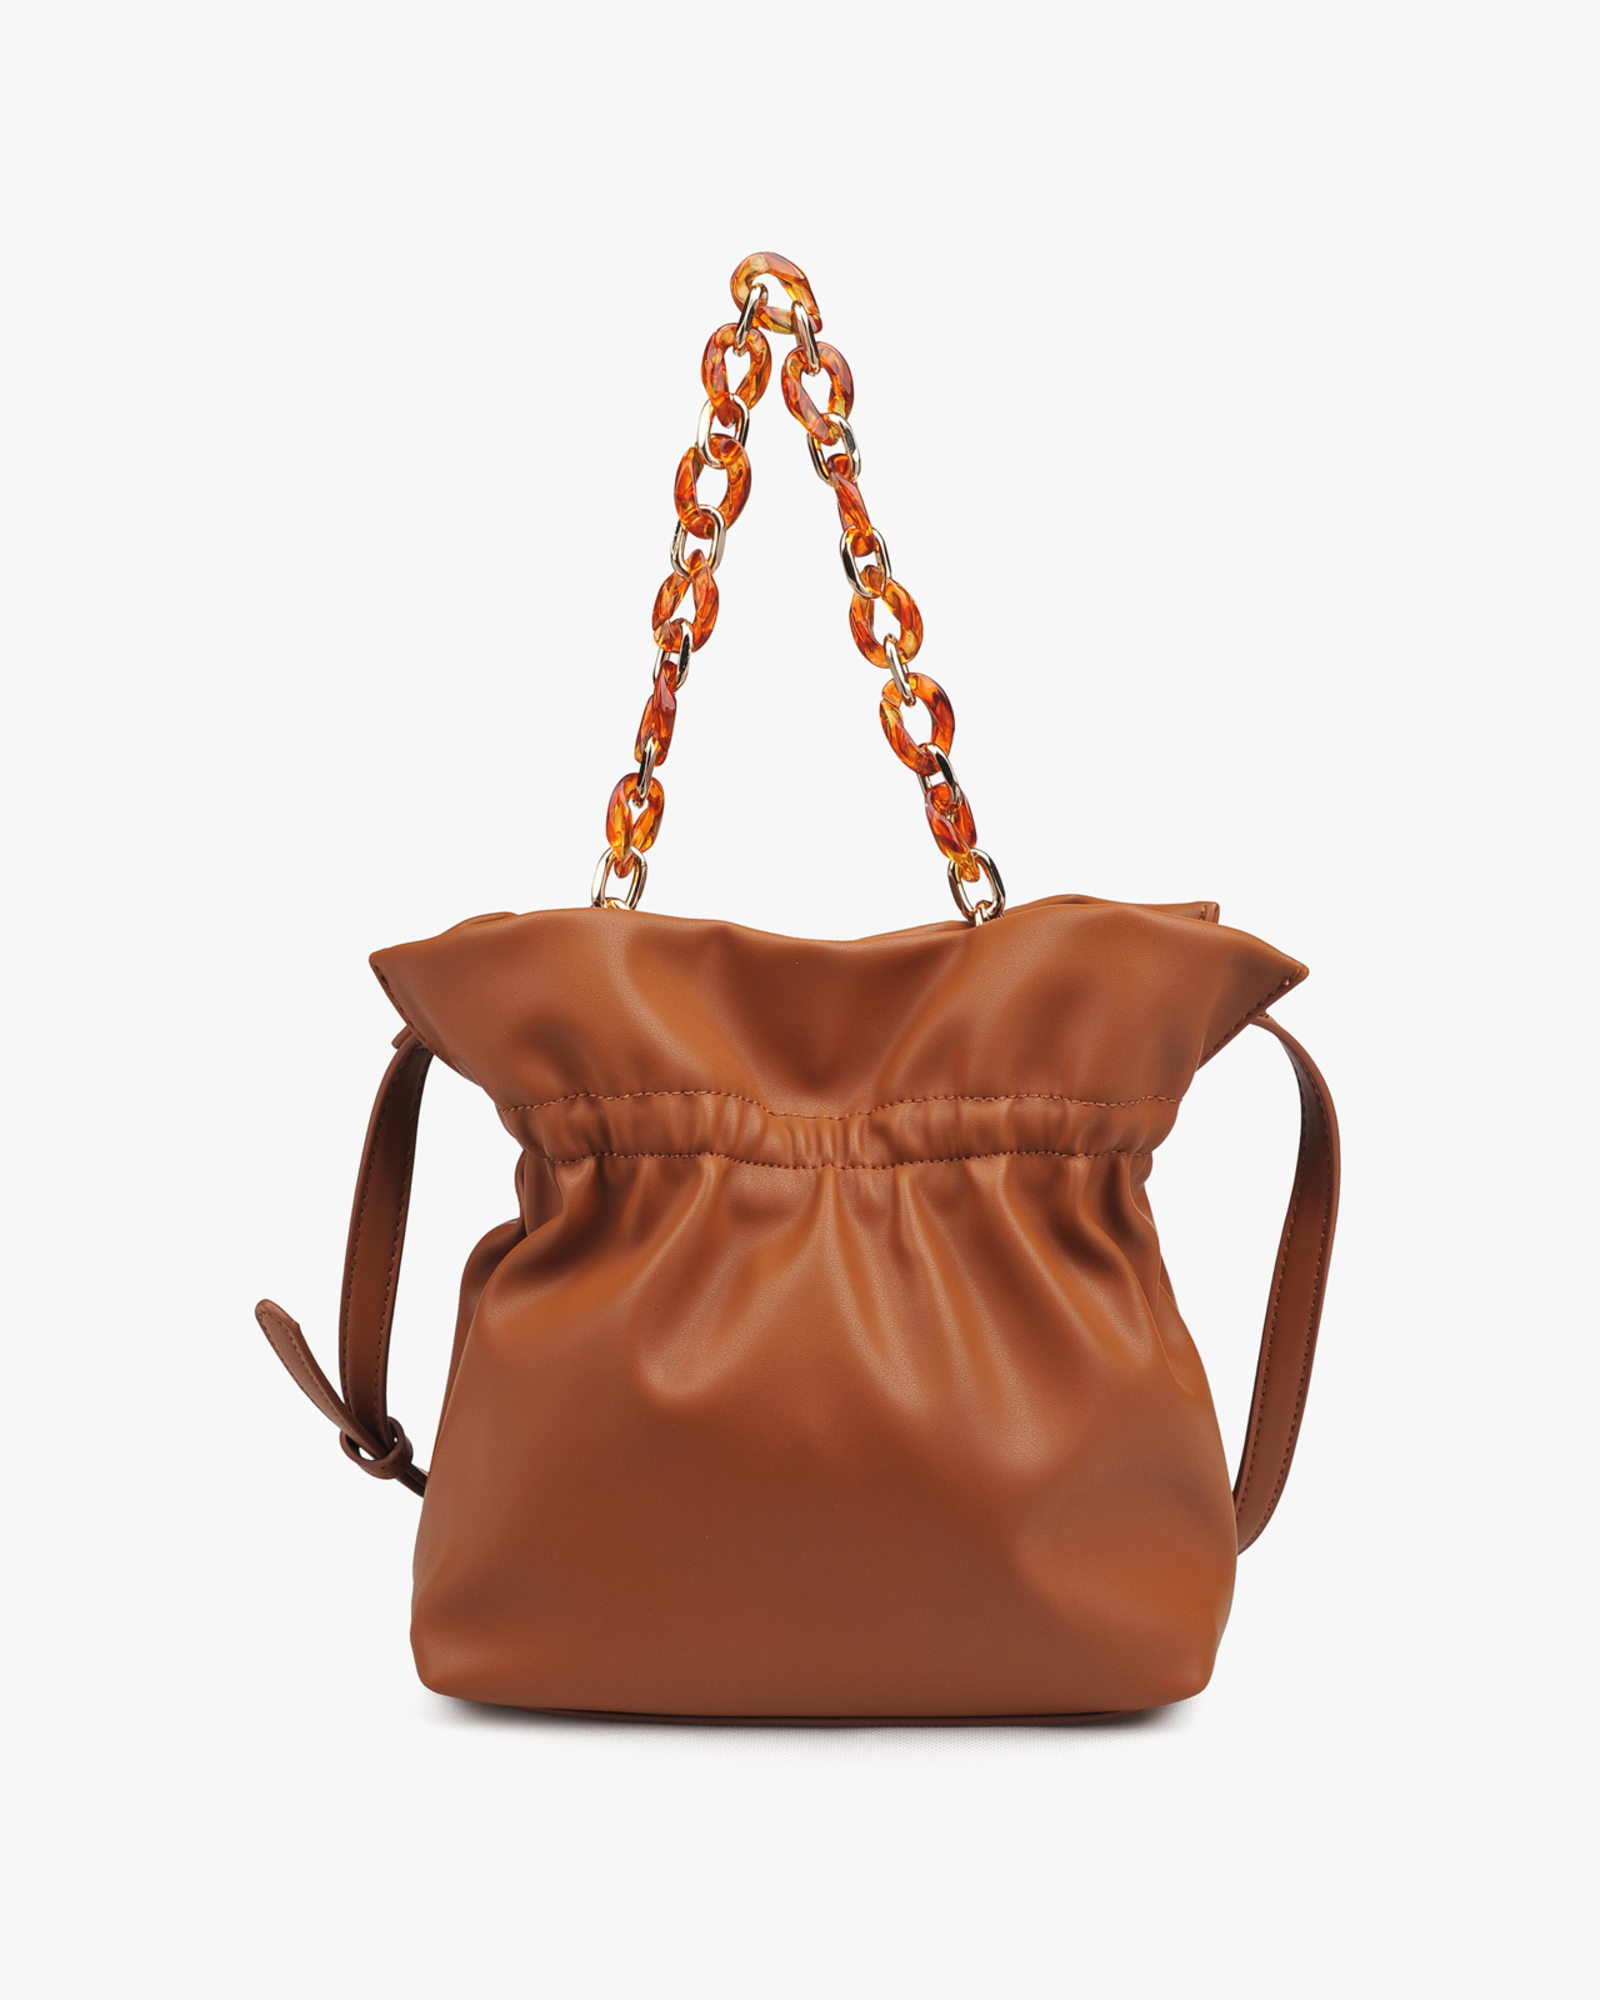 Tiffany Crossbody Bag - Tan, Size OS (One-Size), Dia&Co